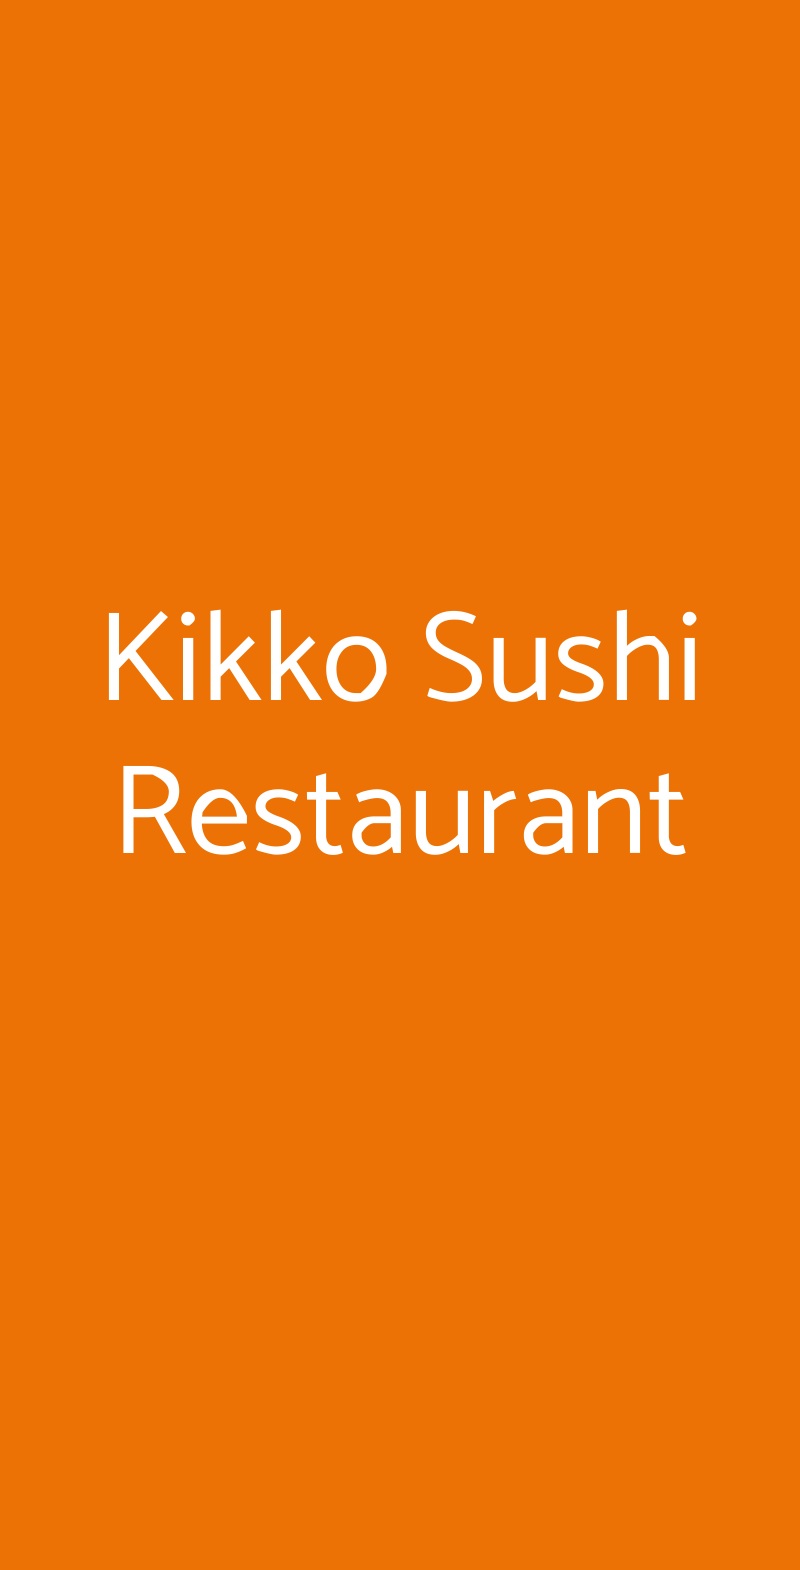 Kikko Sushi Restaurant Pavia menù 1 pagina